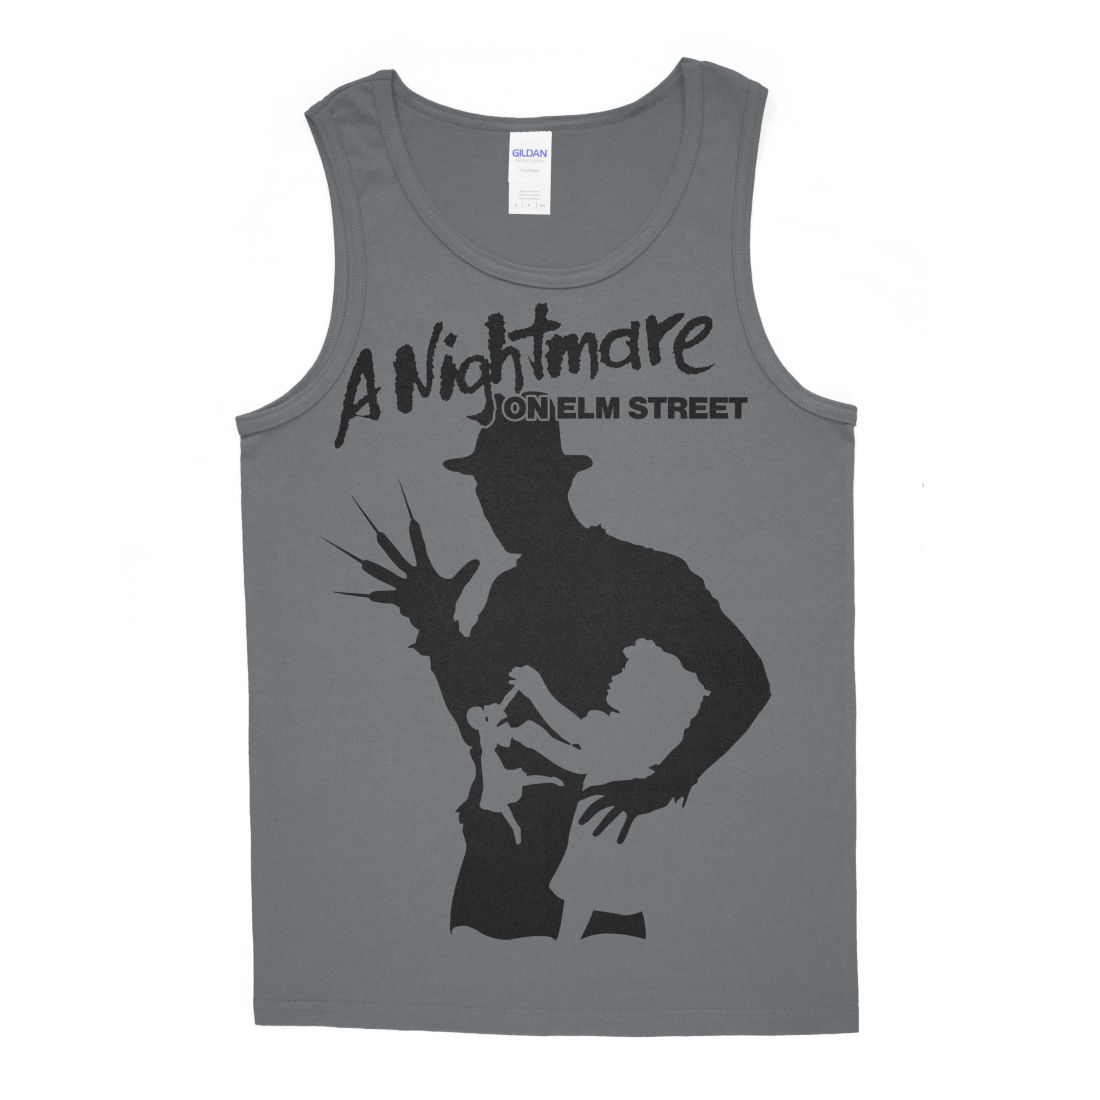 A Nightmare On Elm Street 001 (charcoal színű trikó)